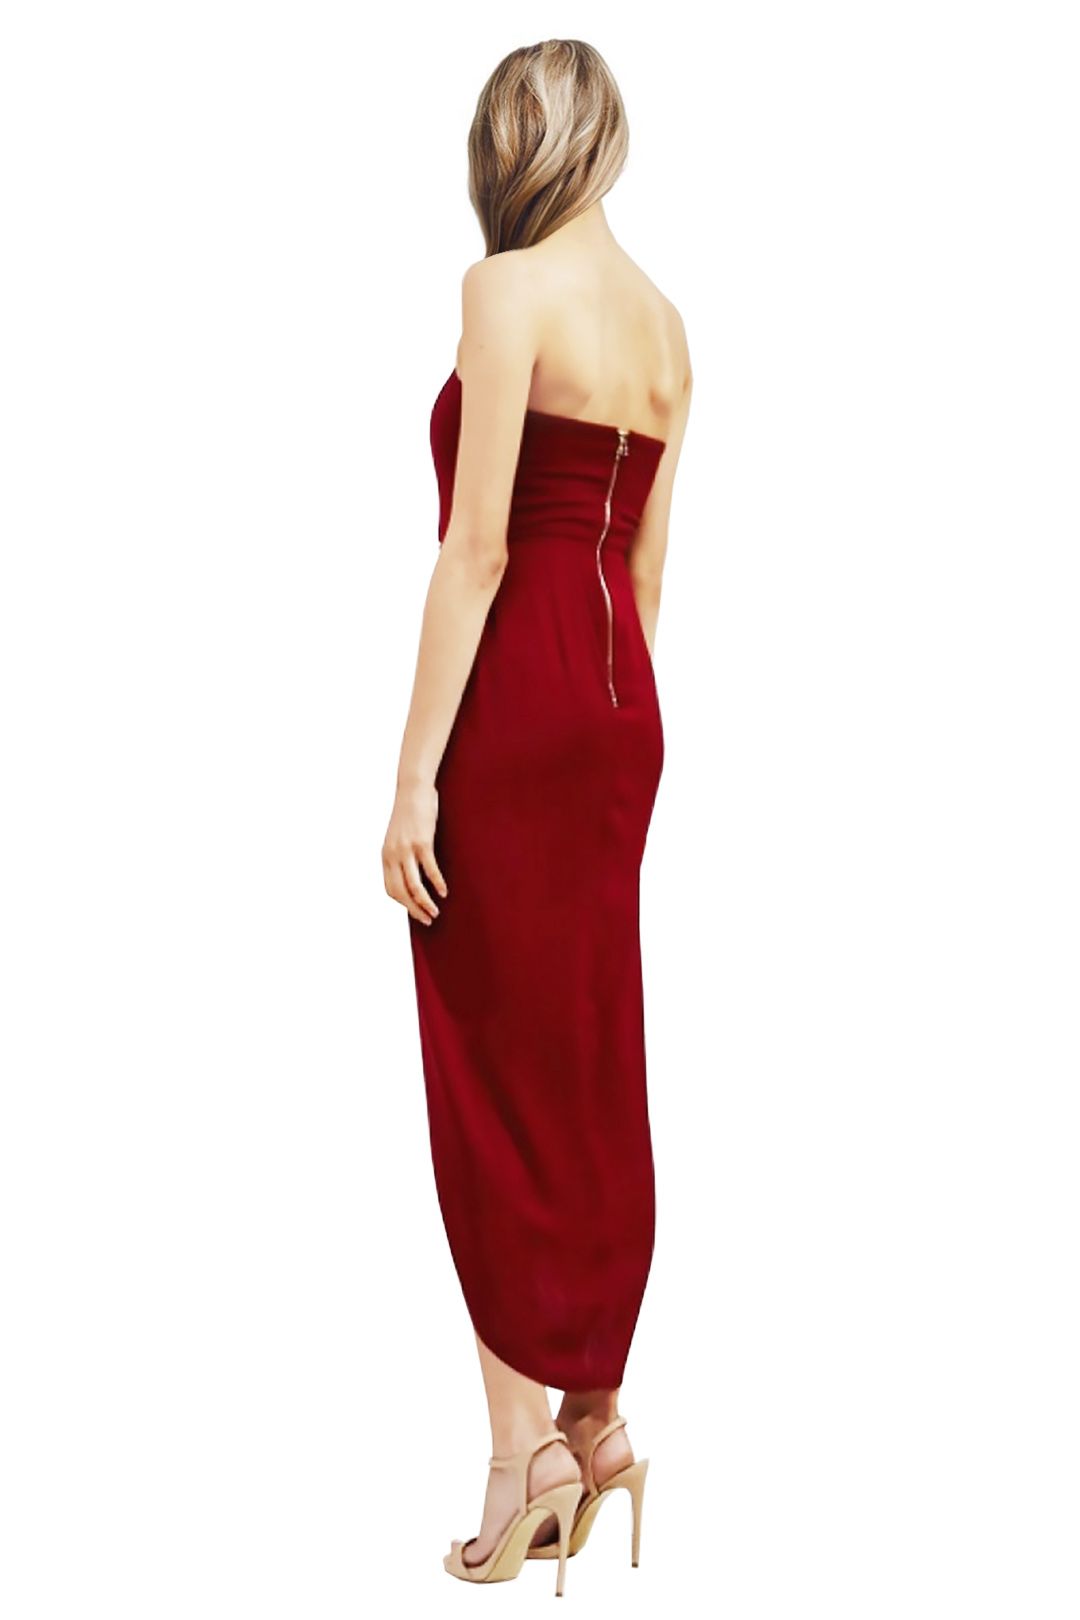 Shona Joy - Core V Bustier Draped Dress